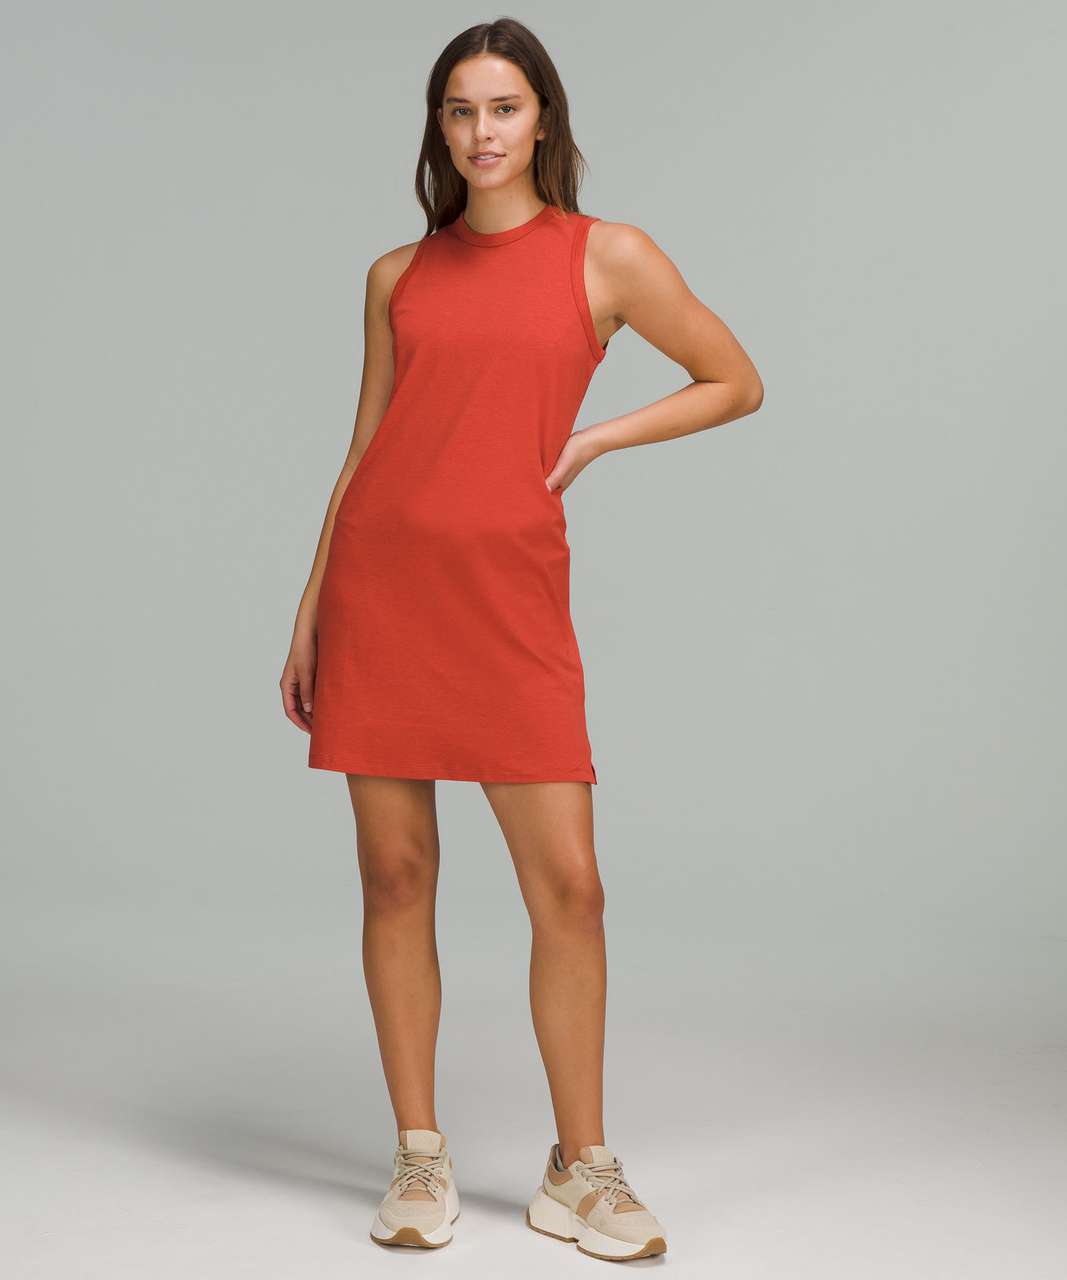 Lululemon Classic-Fit Cotton-Blend Dress - Red Rock